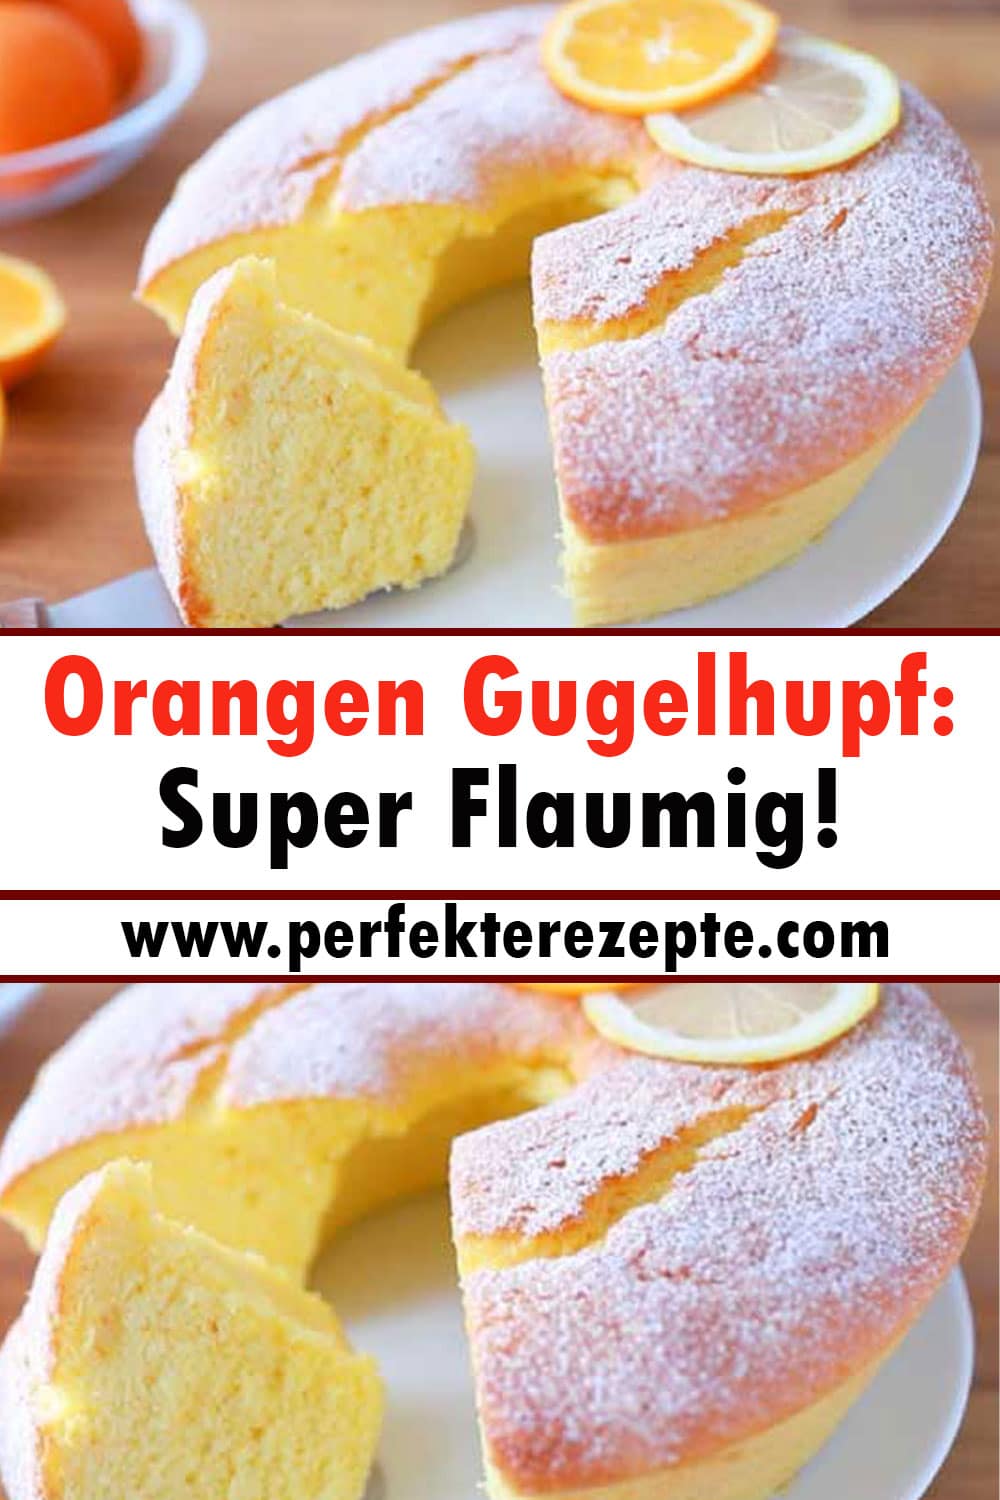 Orangen Gugelhupf Rezept: Super Flaumig!